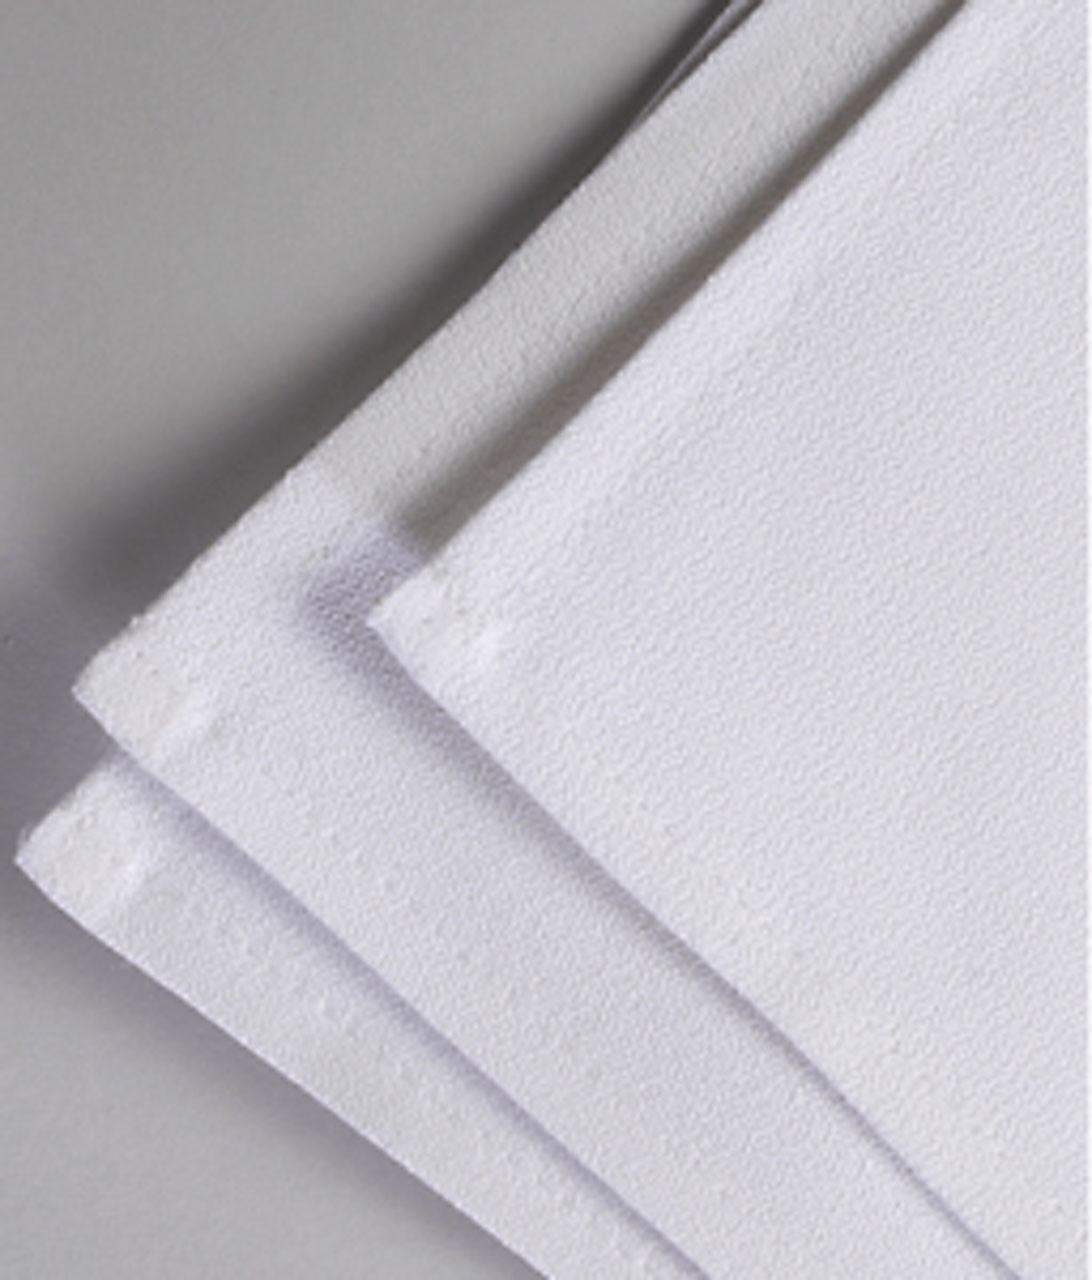 How do these Cotton Momie Linen Napkins enhance table arrangements and meet specific needs?